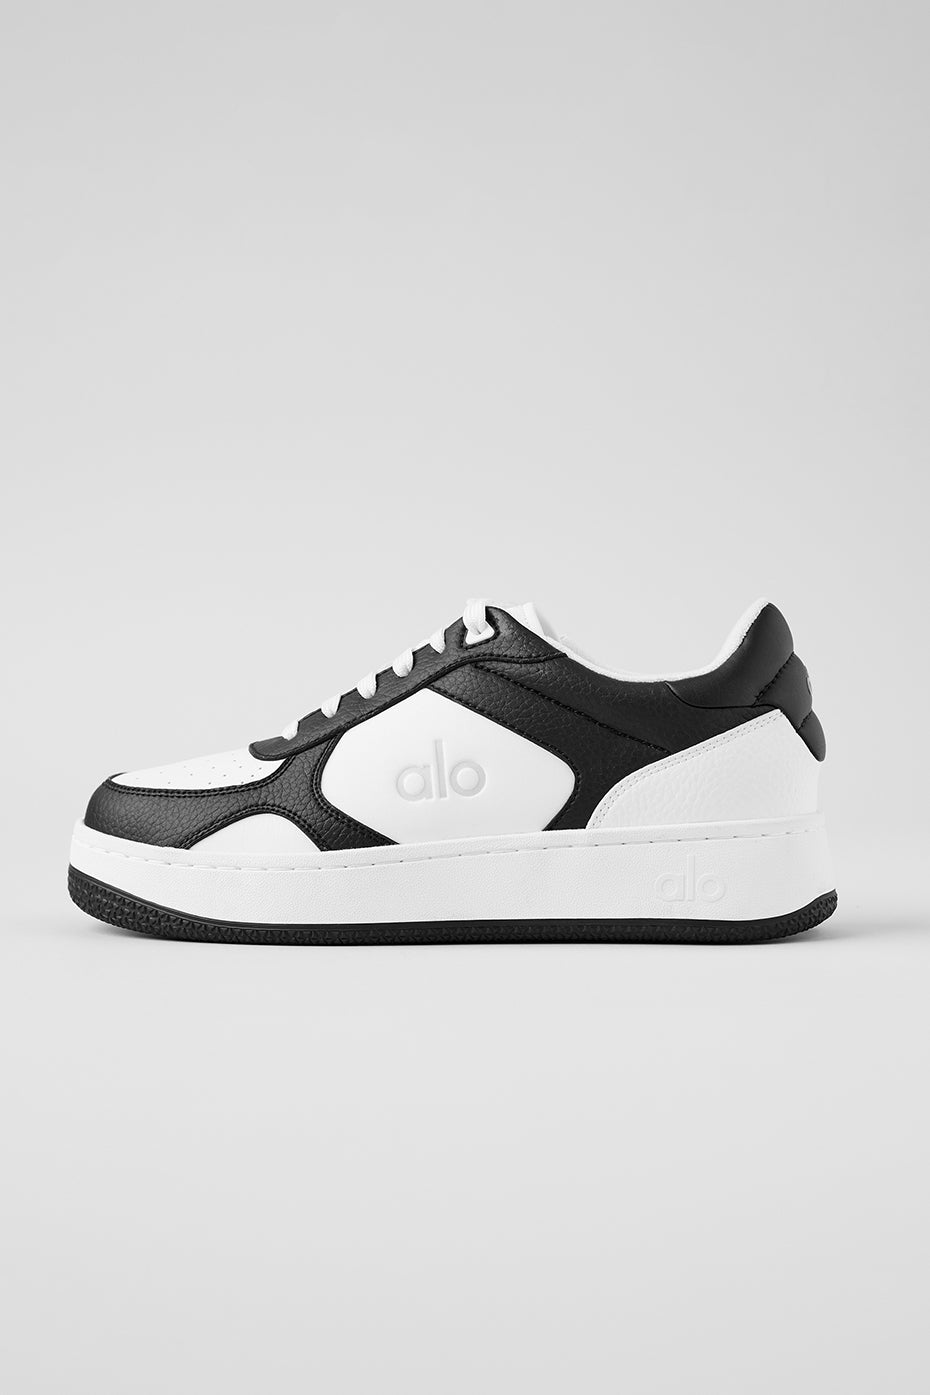 Alo Recovery Mode Sneaker - Black/White